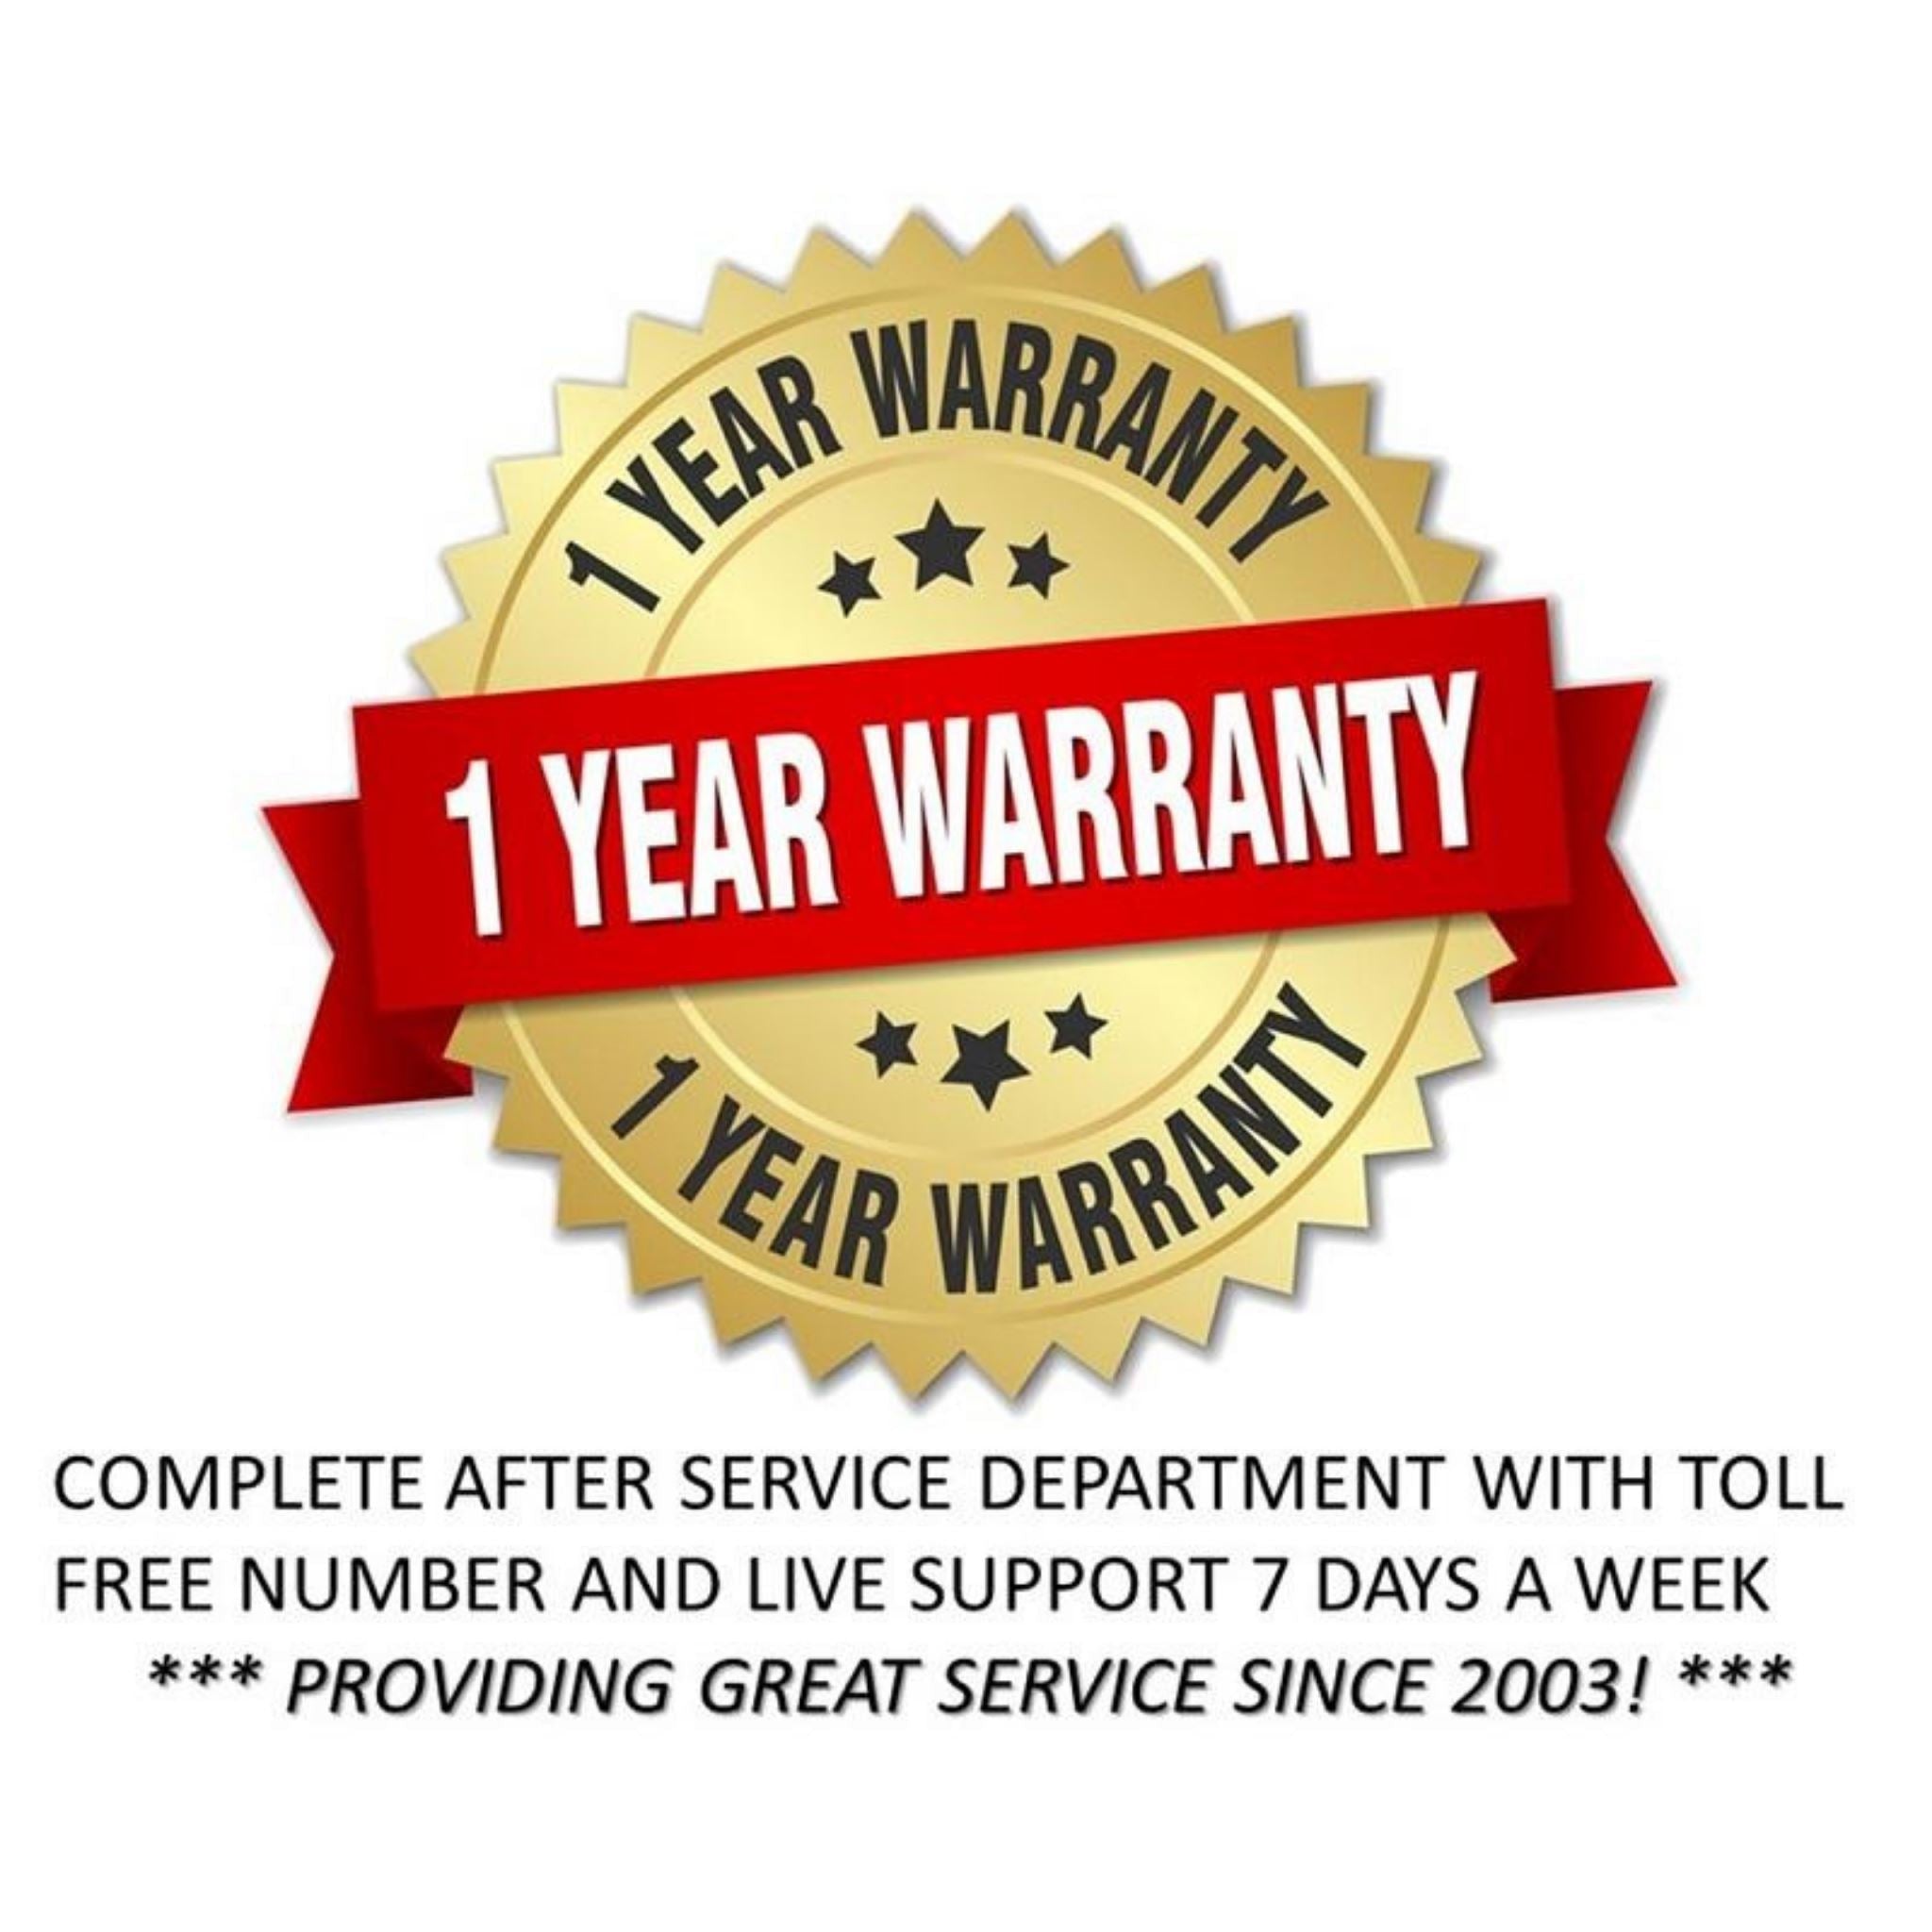 1 year warranty poster